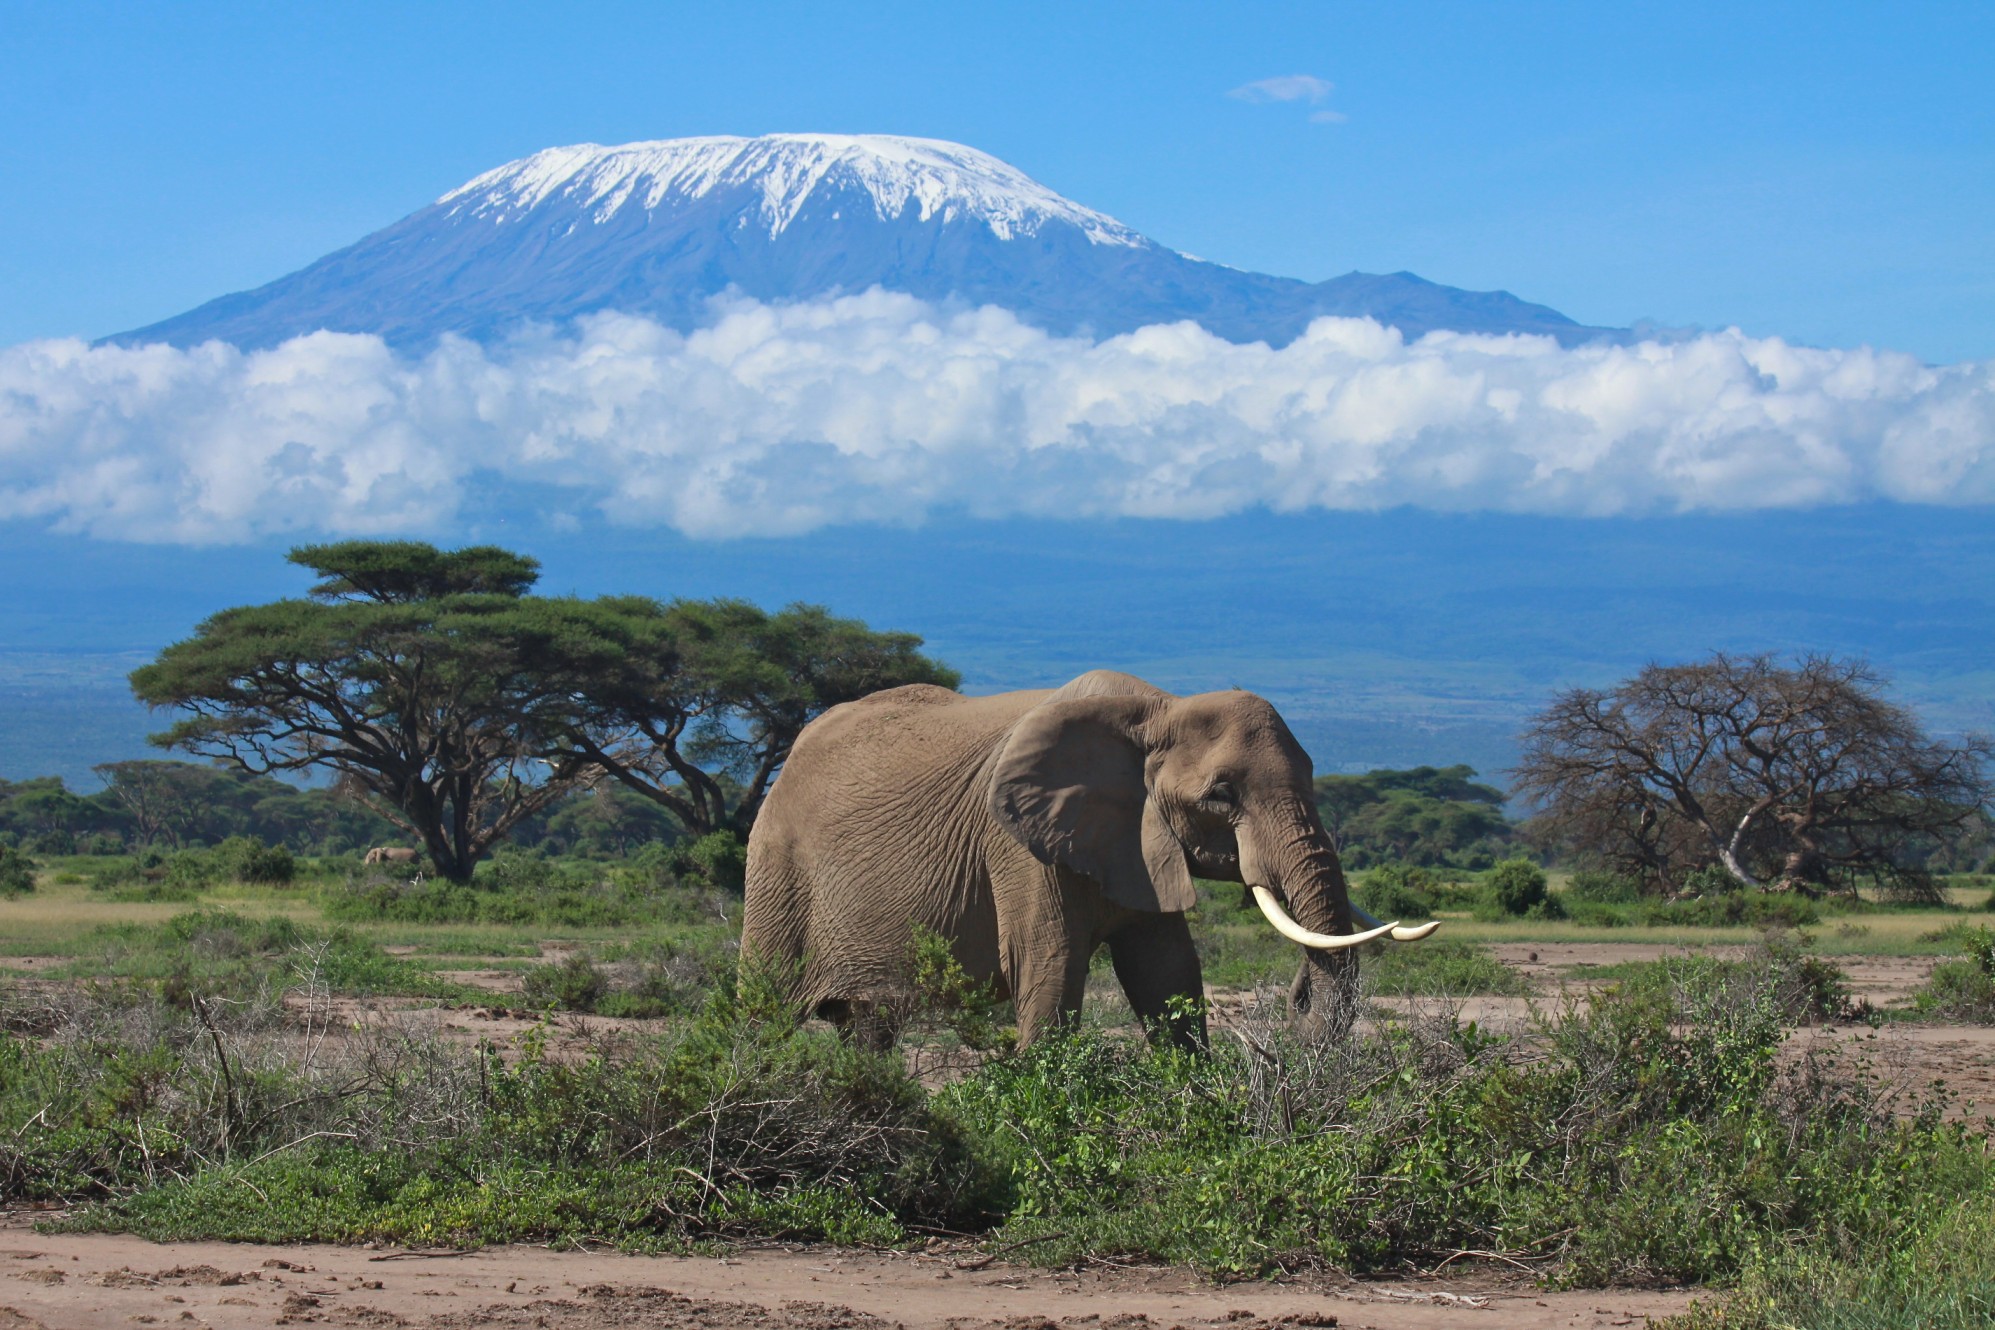 Mount Kilimanjaro in the background